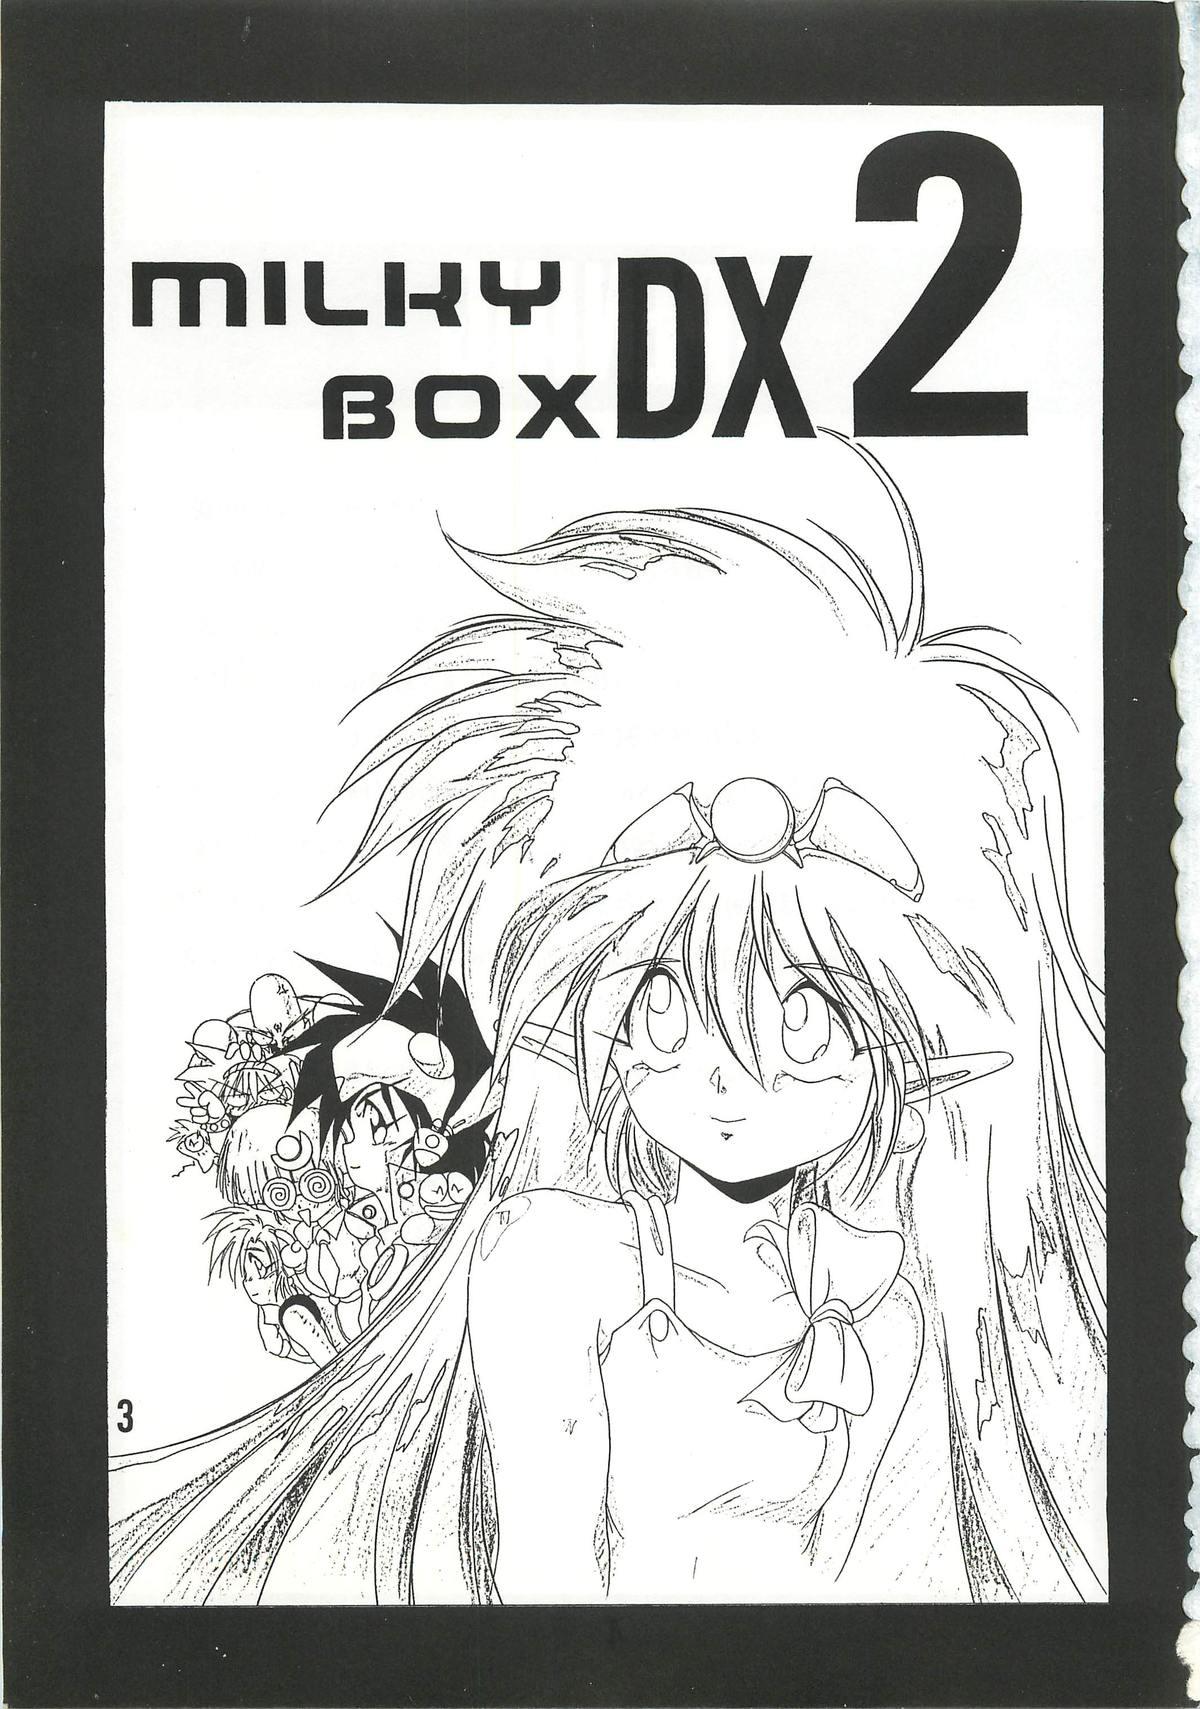 MILKY BOX DX2 1